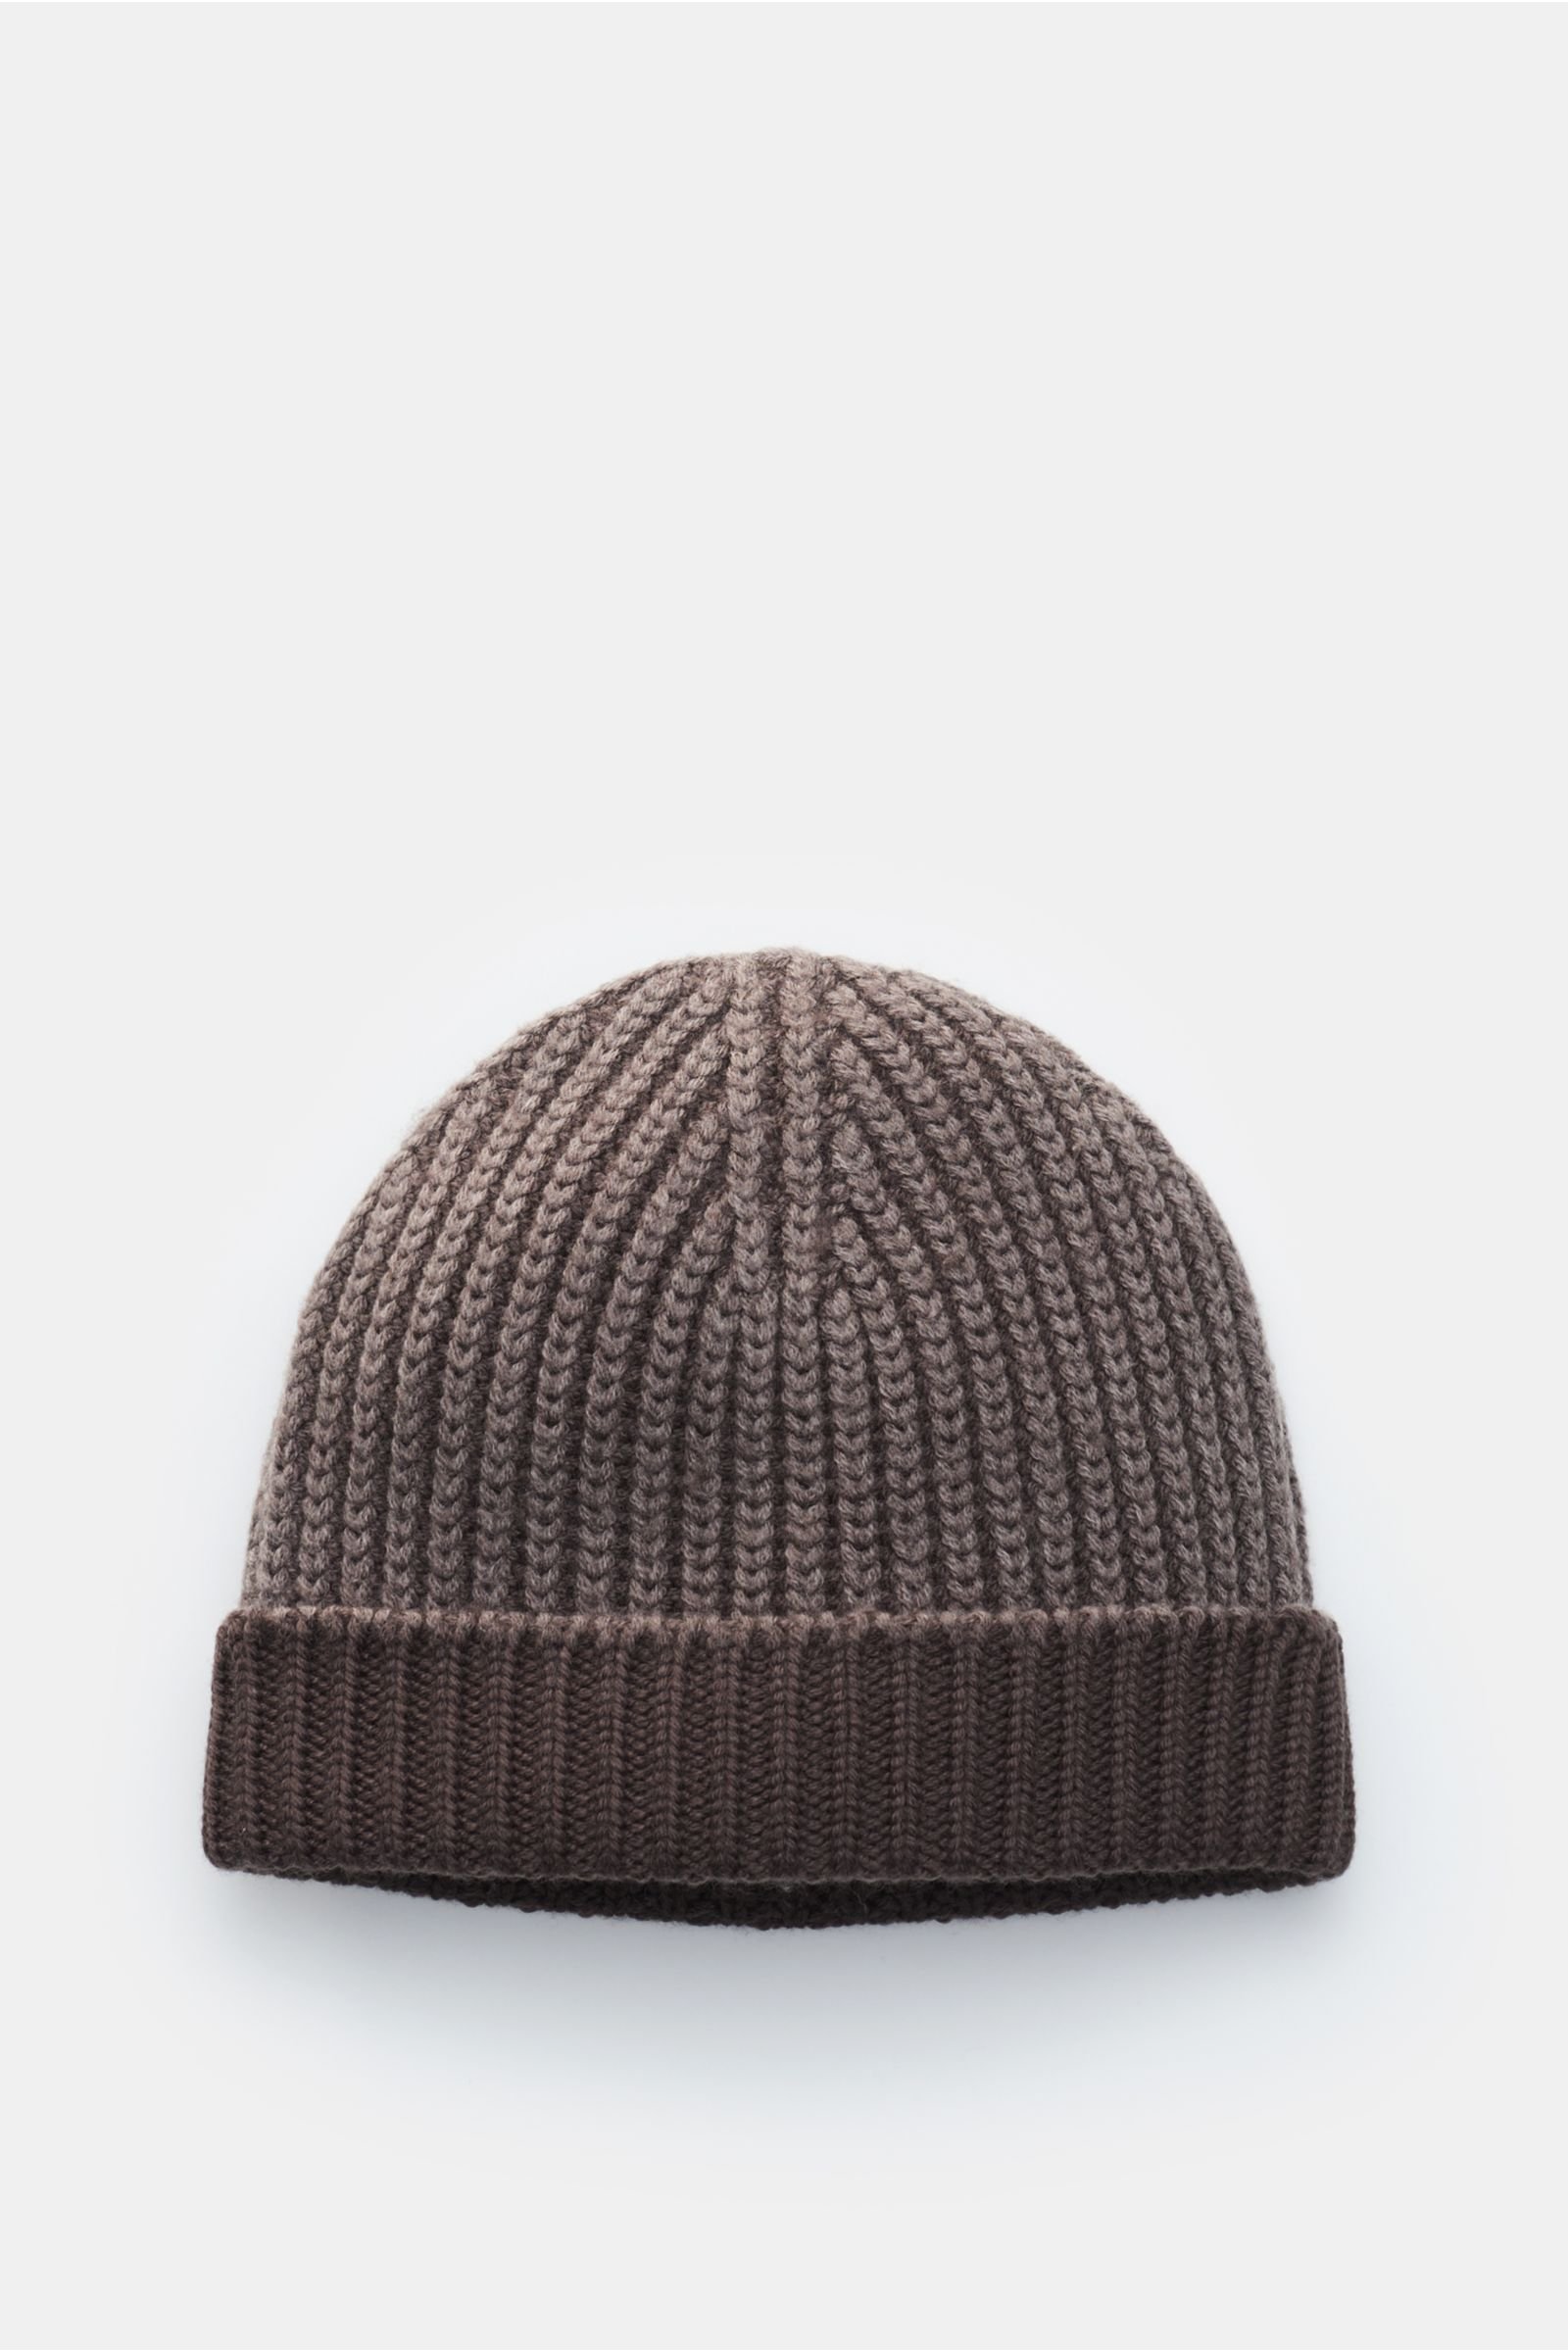 Wool beanie 'Foggy Hat' grey-brown